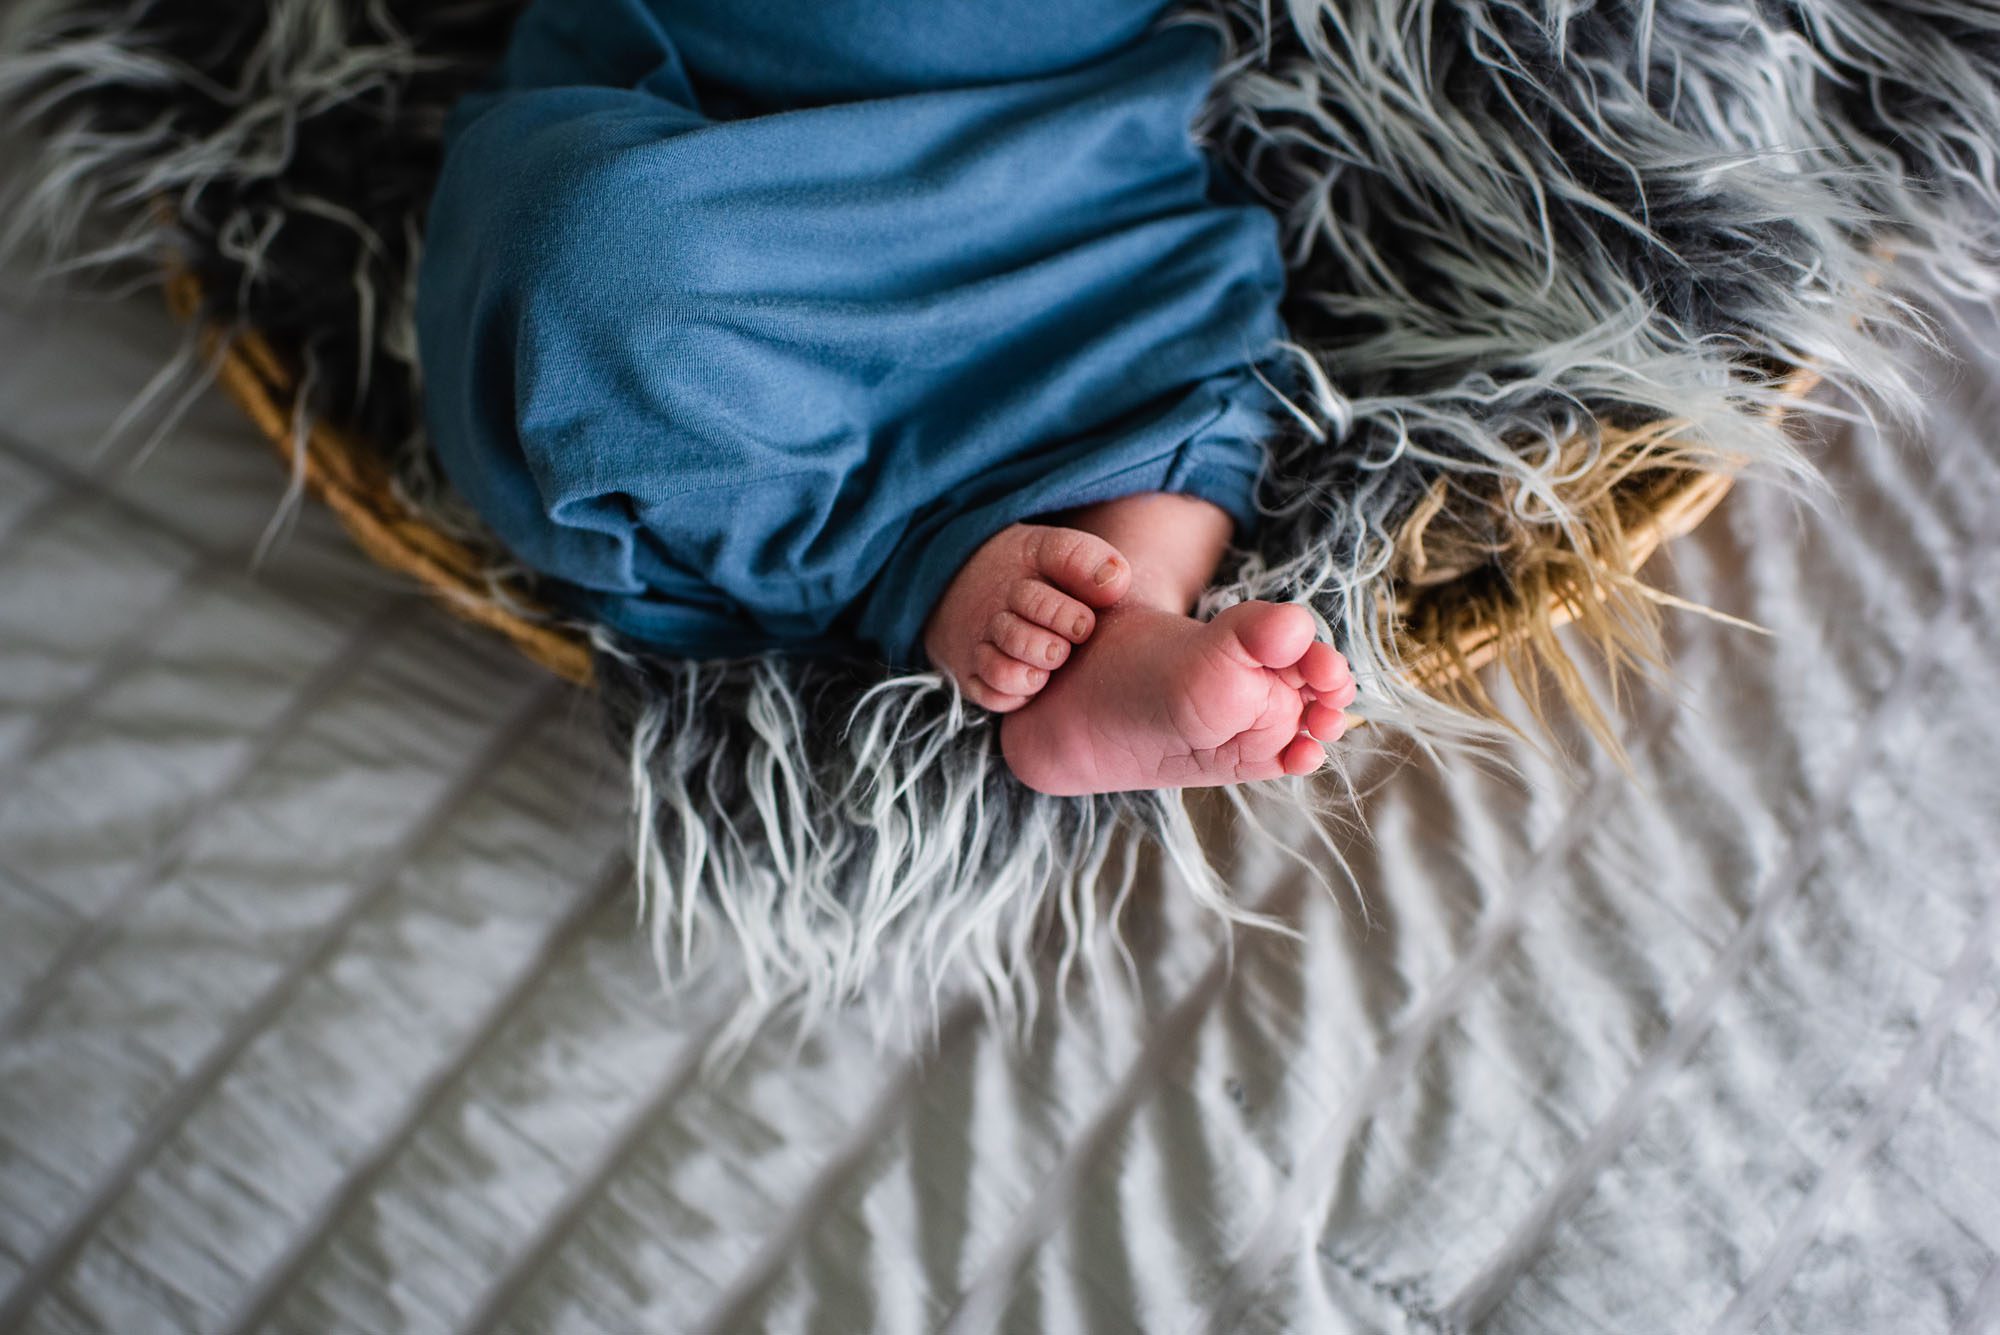 San Antonio Newborn Photographer, newborn baby feet